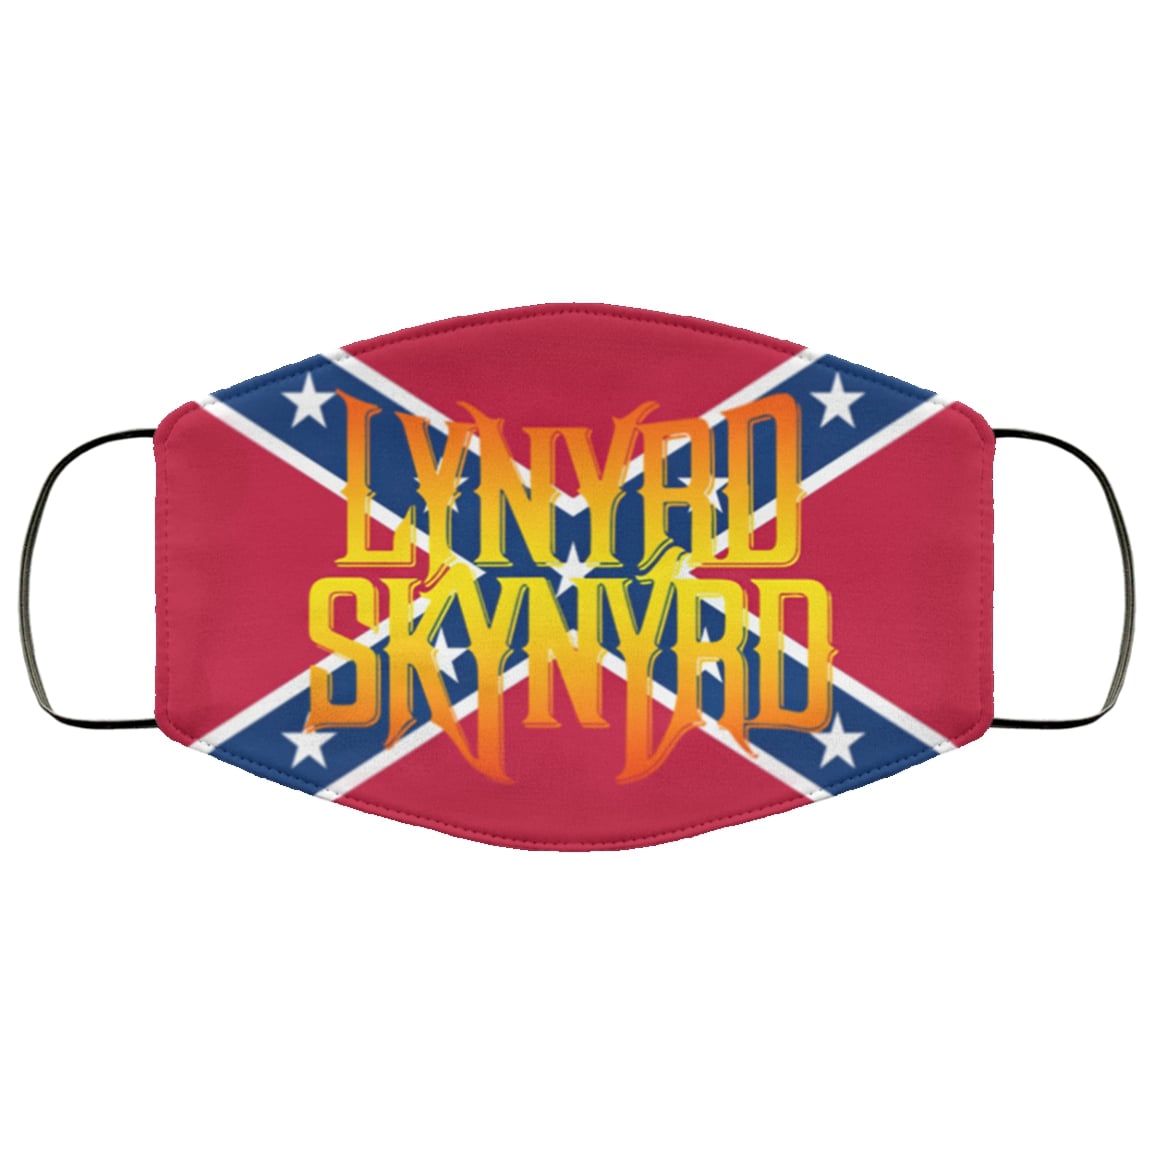 Lynyrd skynyrd confederate flag all over printed face mask 1